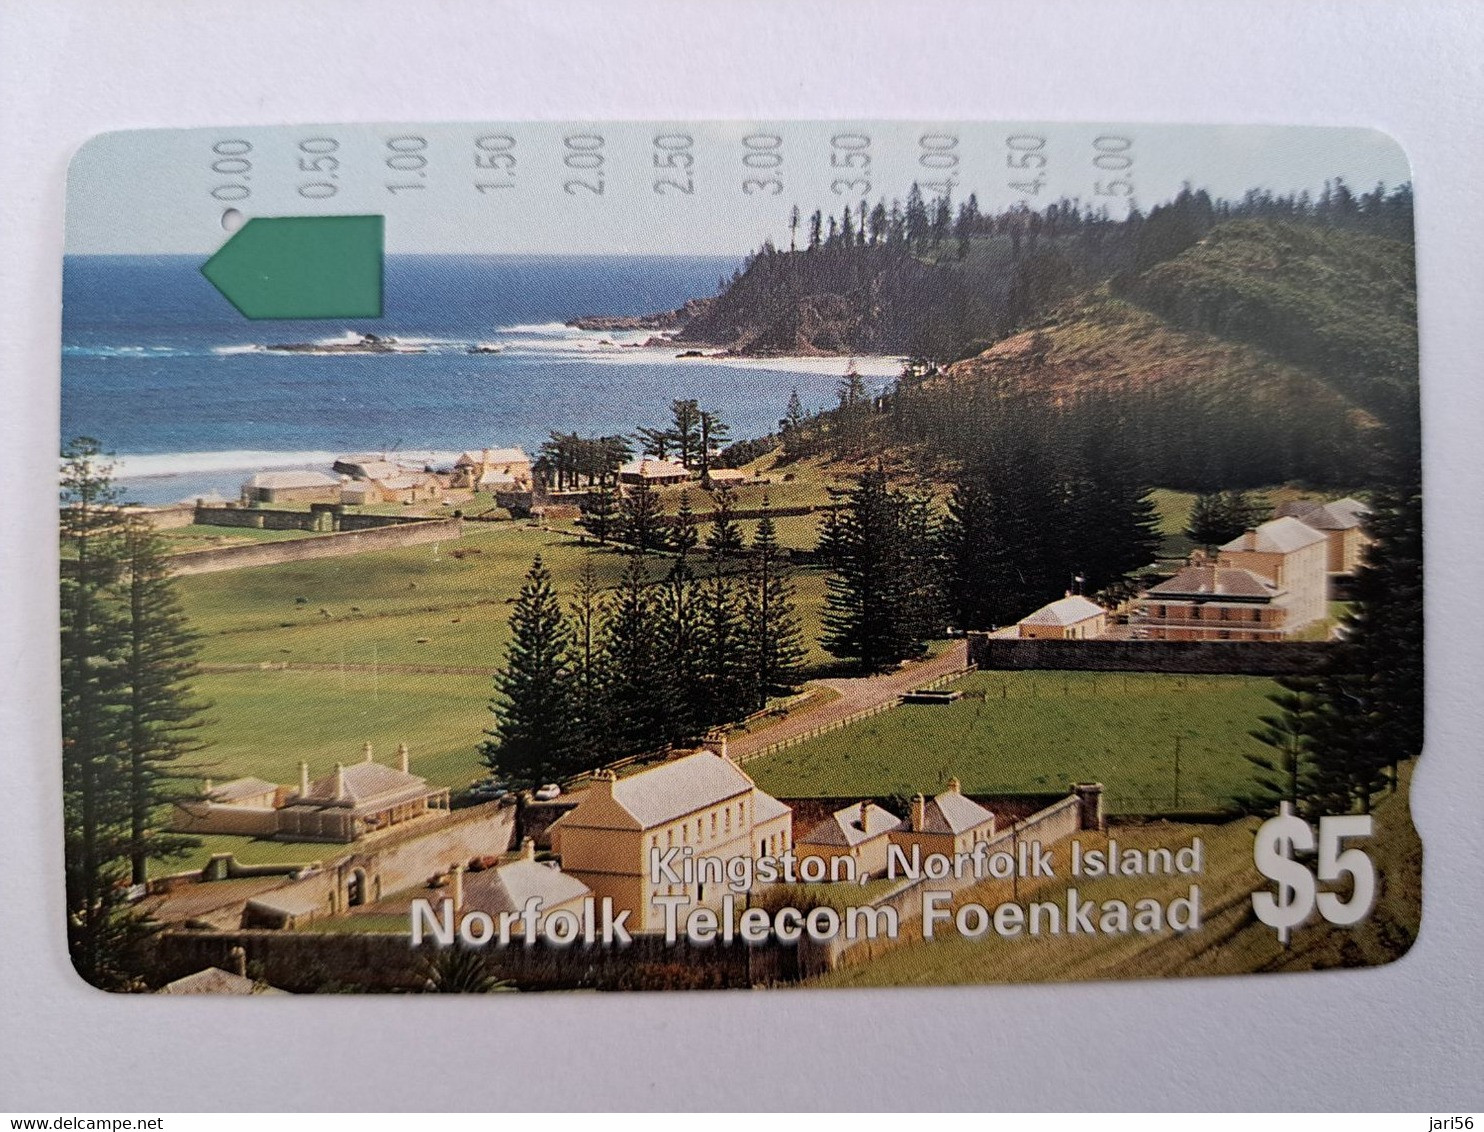 NORFOLK ISLANDS/ KINGSTON NORFOLK ISLAND $5,- SERIES NO 1 / TELSTRA  FINE USED **10731** - Norfolkinsel